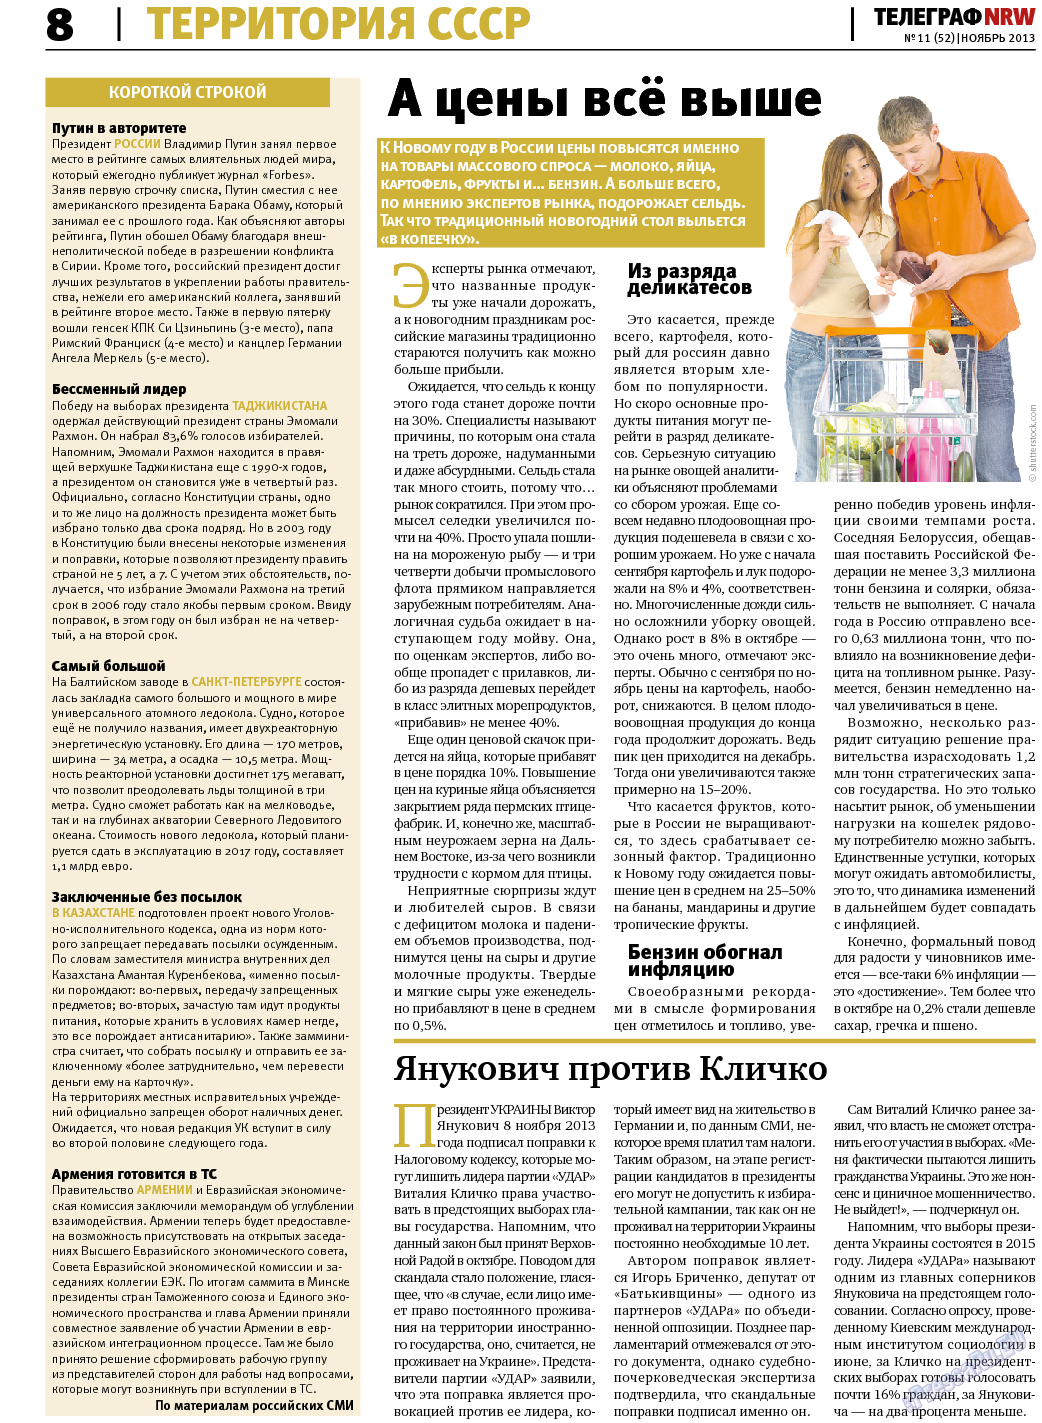 Телеграф NRW, газета. 2013 №11 стр.8